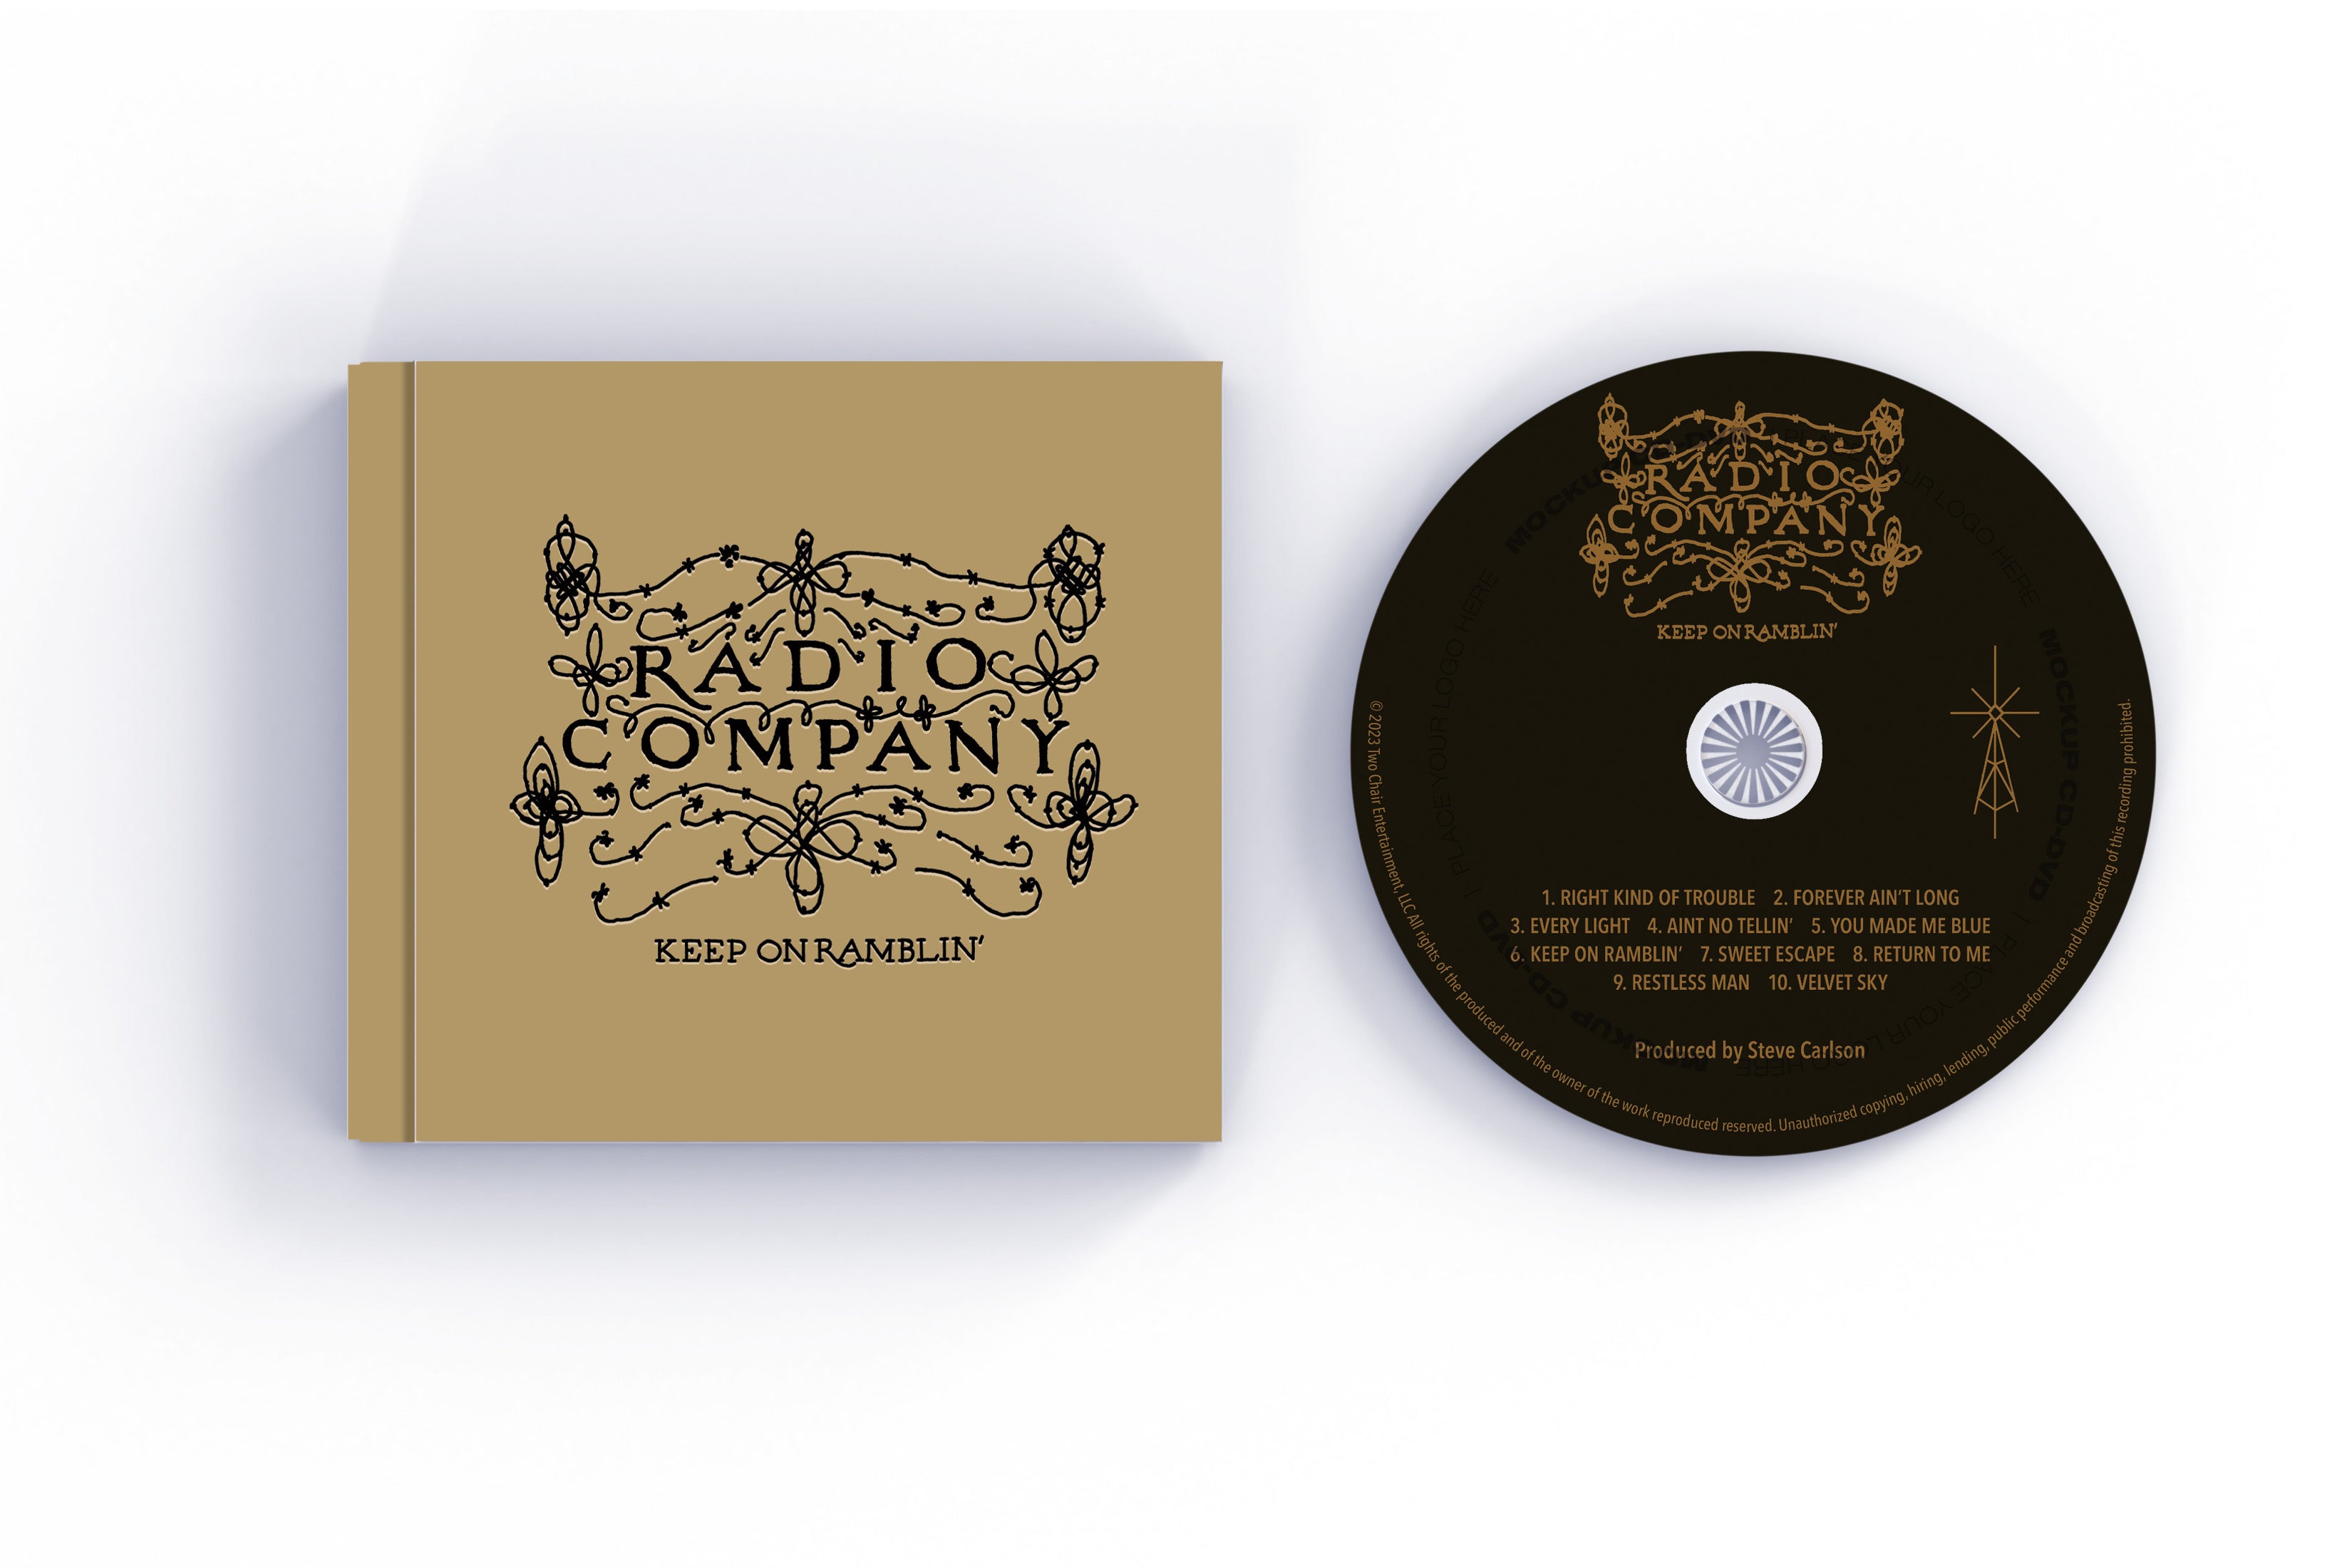 Radio Company - "Keep On Ramblin'" Limited Edition CD